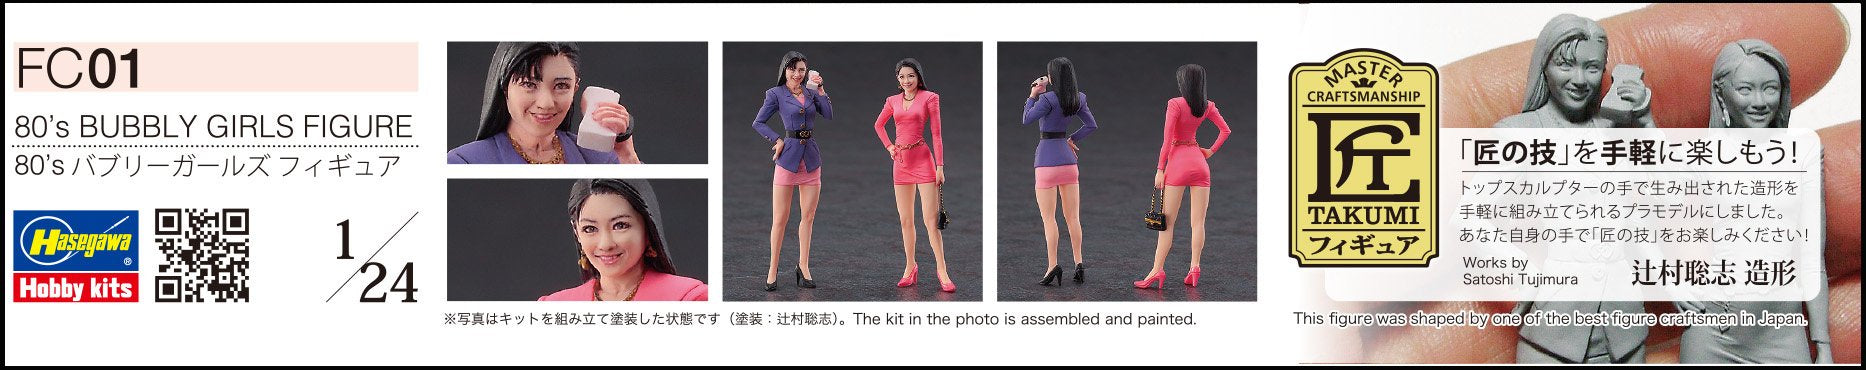 Hasagawa 1/24 80's Bubbly Girls Figure Plastic Model Kit FC01 Not Painted NEW_7